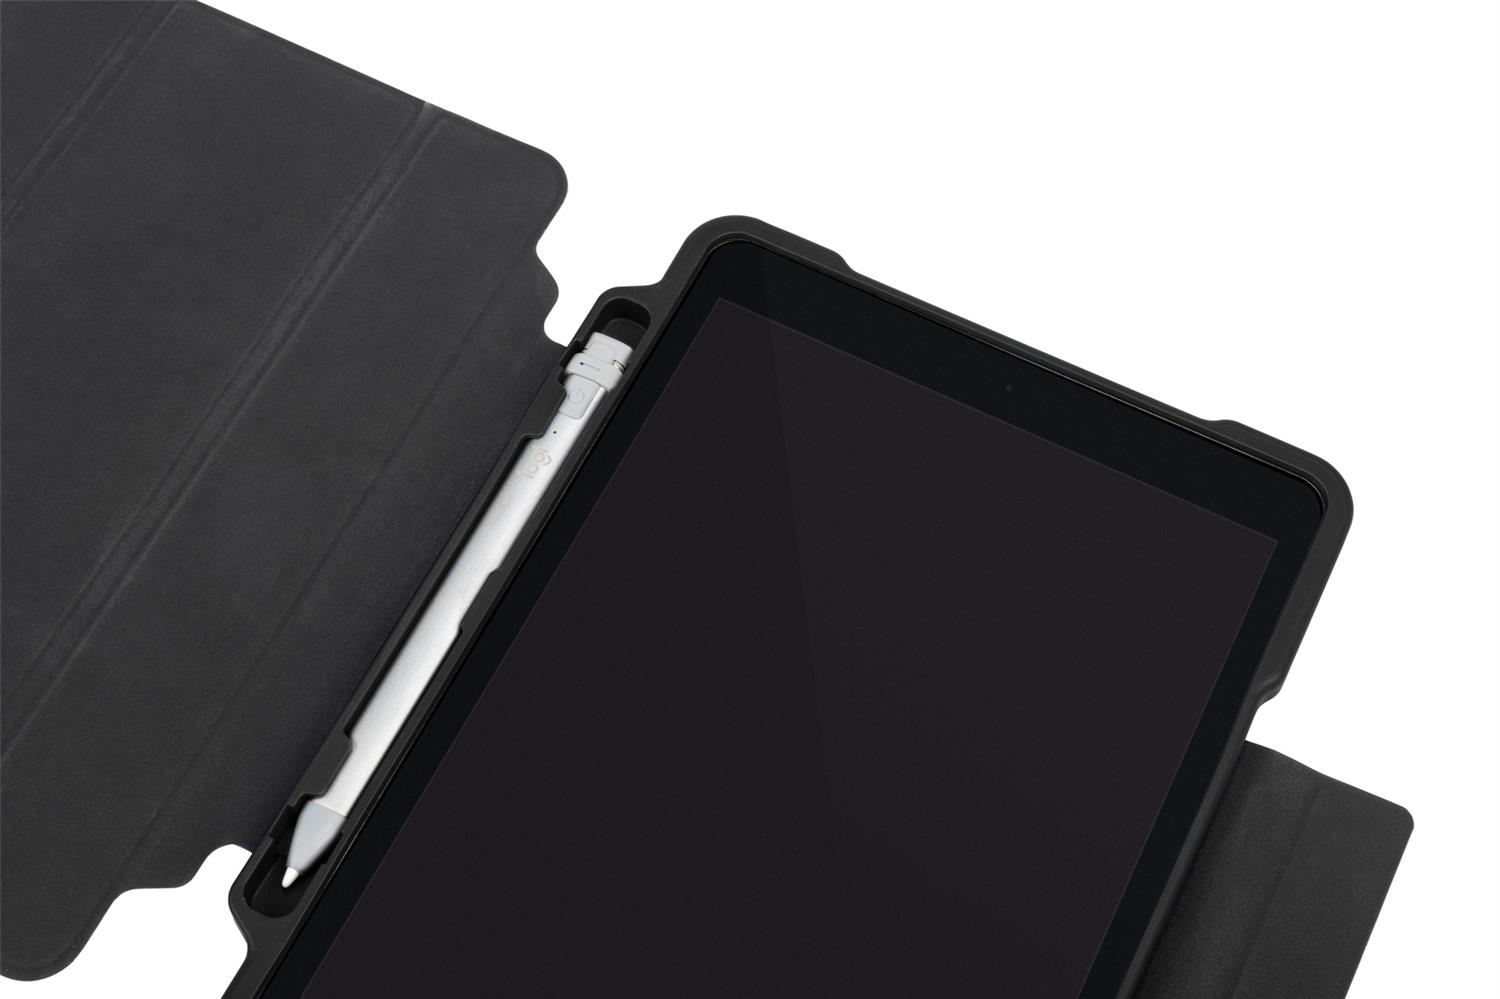 Tucano Alunno ultra Schutzcase für das iPad 10,2 Zoll / 10,5 Zoll - Schwarz